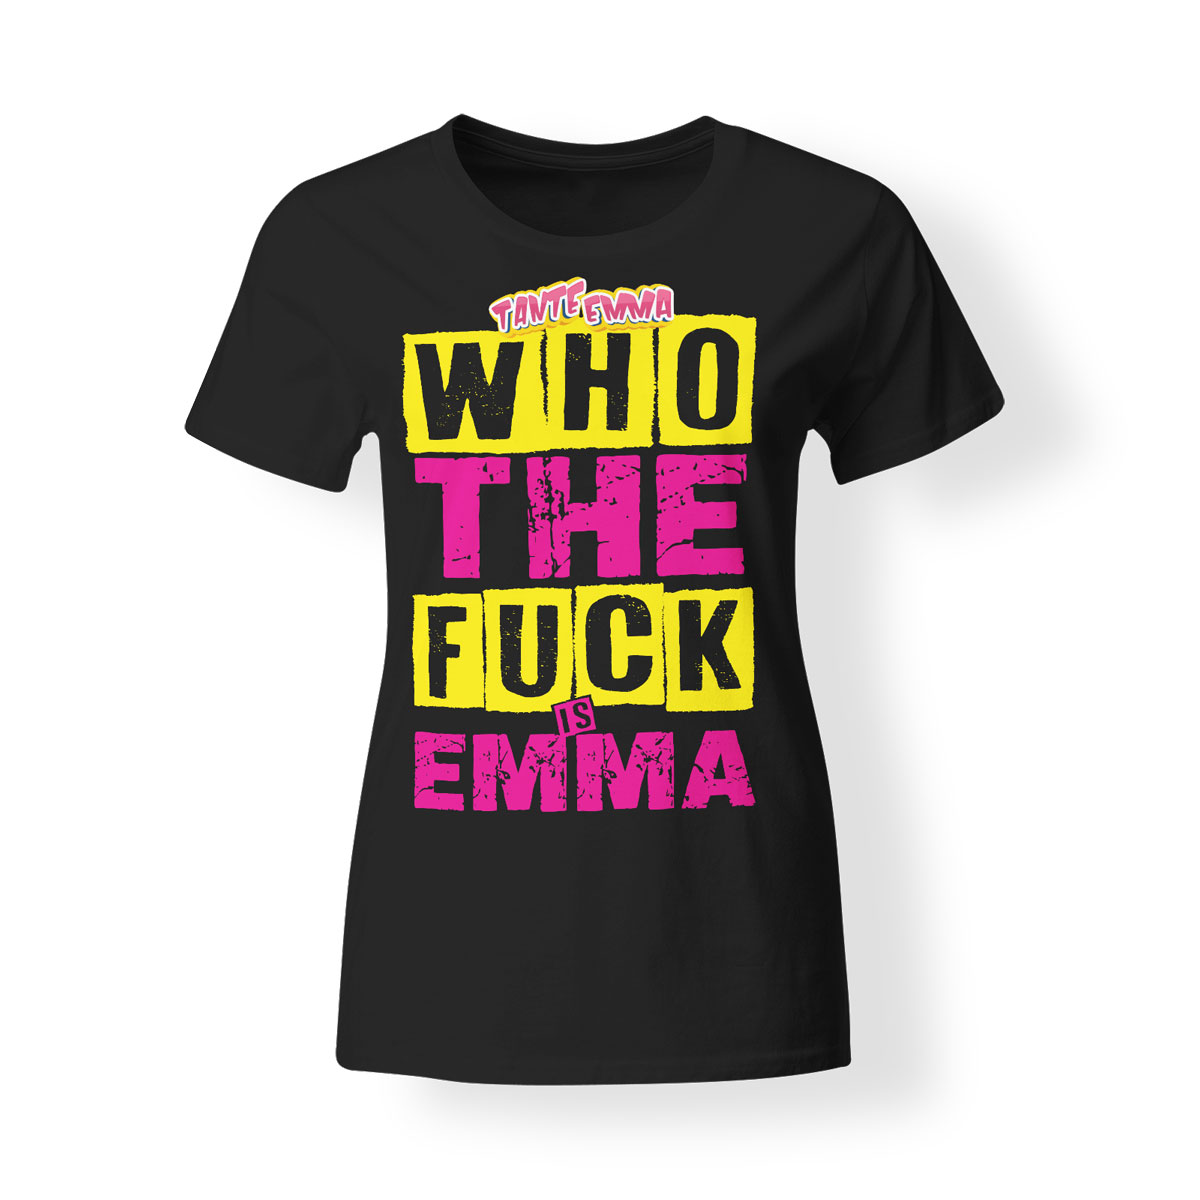 Vollgasorchester Tante Emma Who the fuck is emma T-Shirt